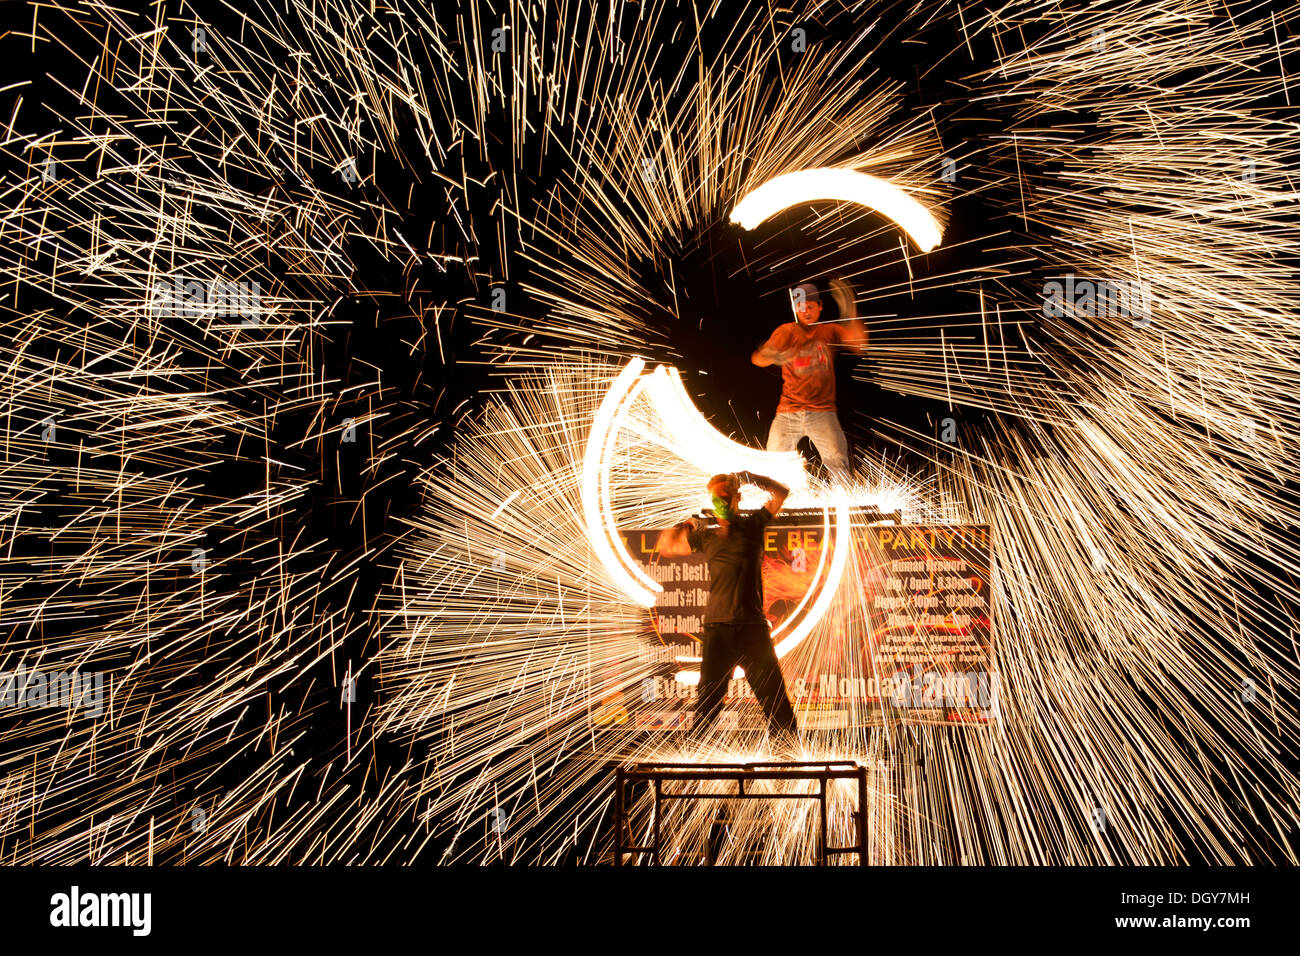 Feuershow am Lamai Strand in Thailand Stockfoto